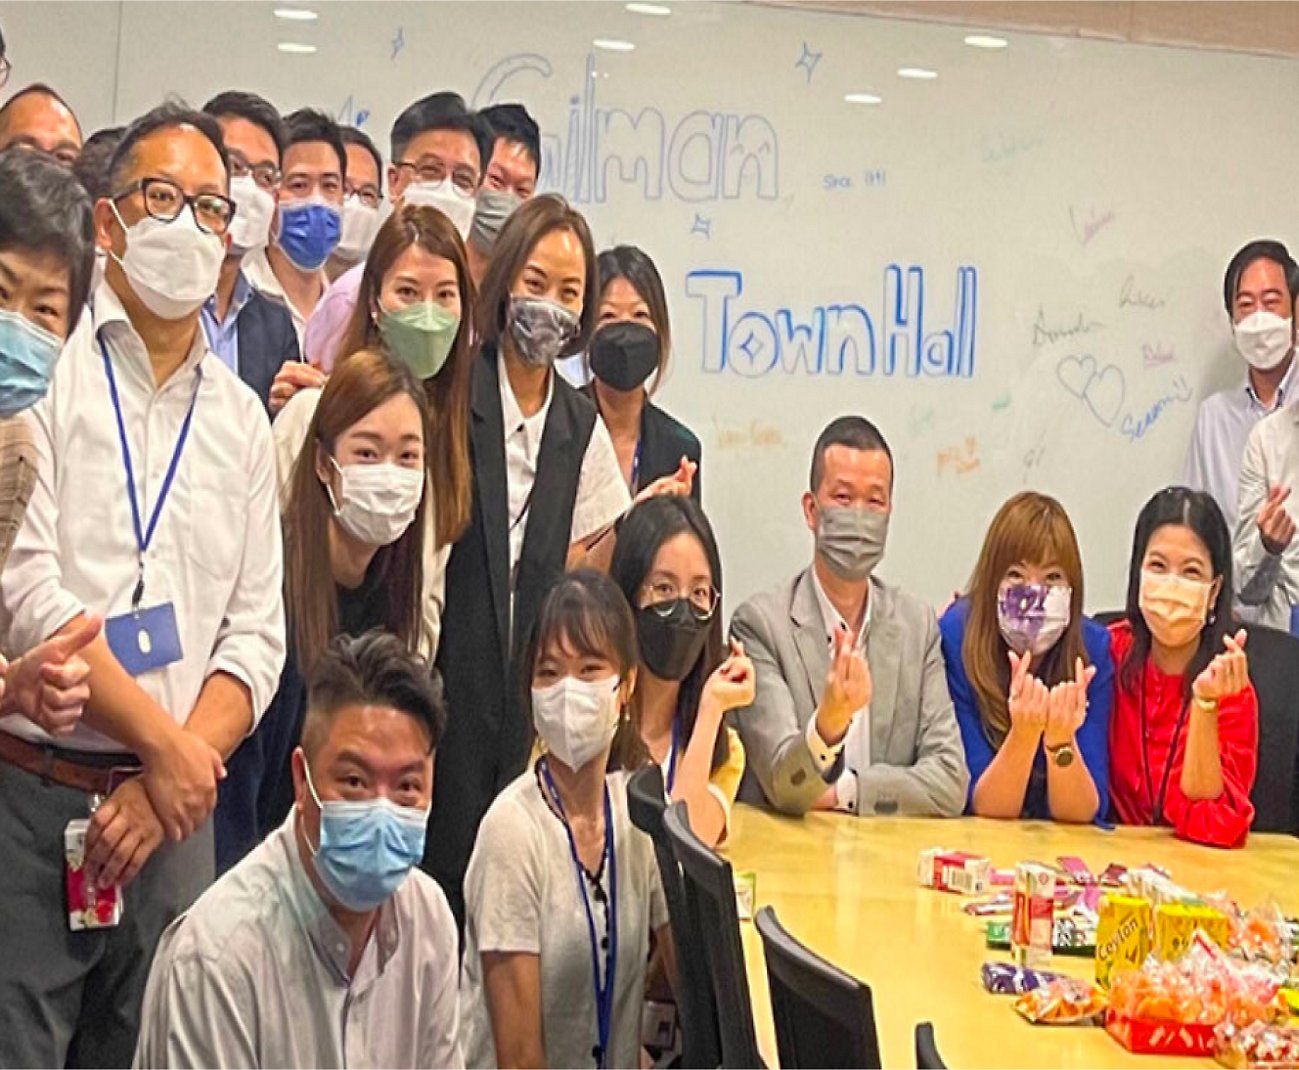 En gruppe mennesker poserer på et bilde iført ansiktsmasker.